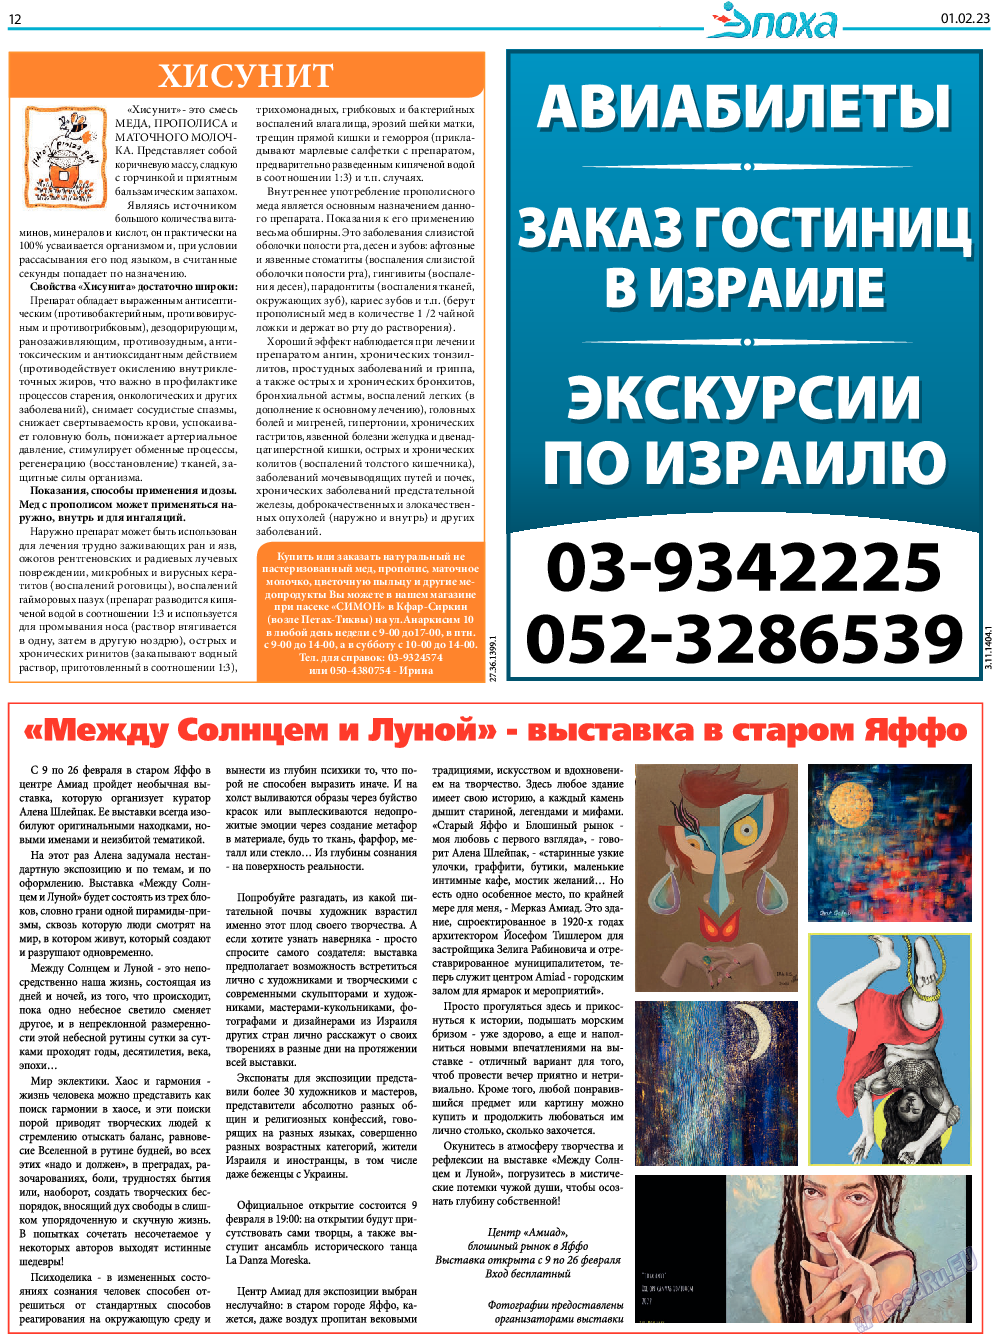 Эпоха, газета. 2023 №1413 стр.12